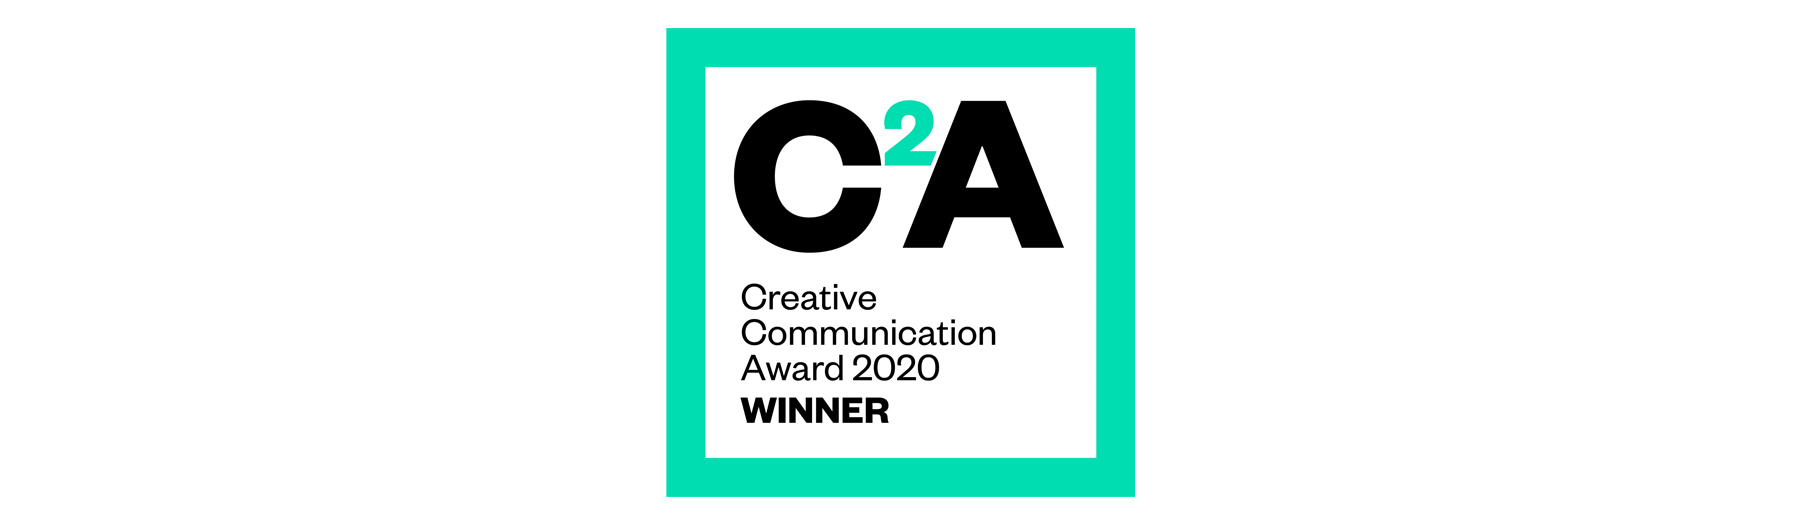 Behind Closed Doors・C2A CREATIVE COMMUNICATIONS AWARD 2020・Winner・Manja Wachsmuth